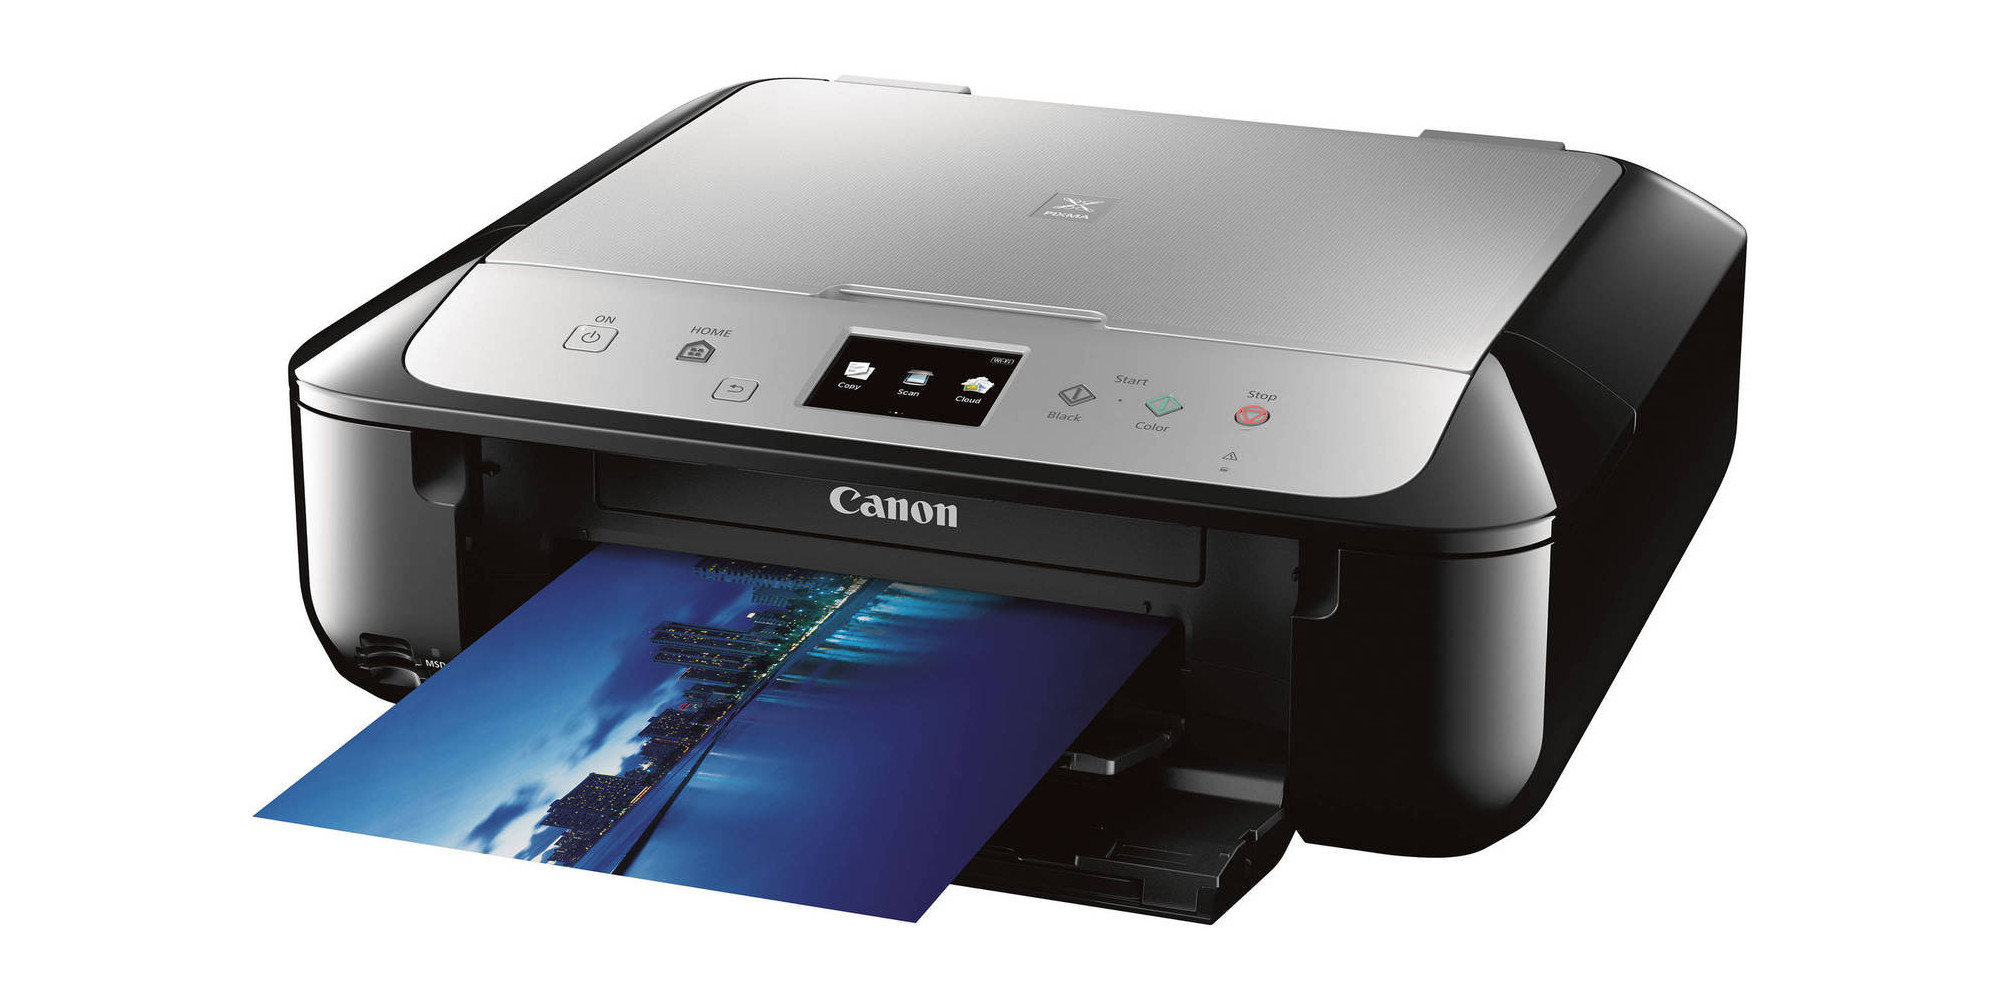 canon photo printer software for mac